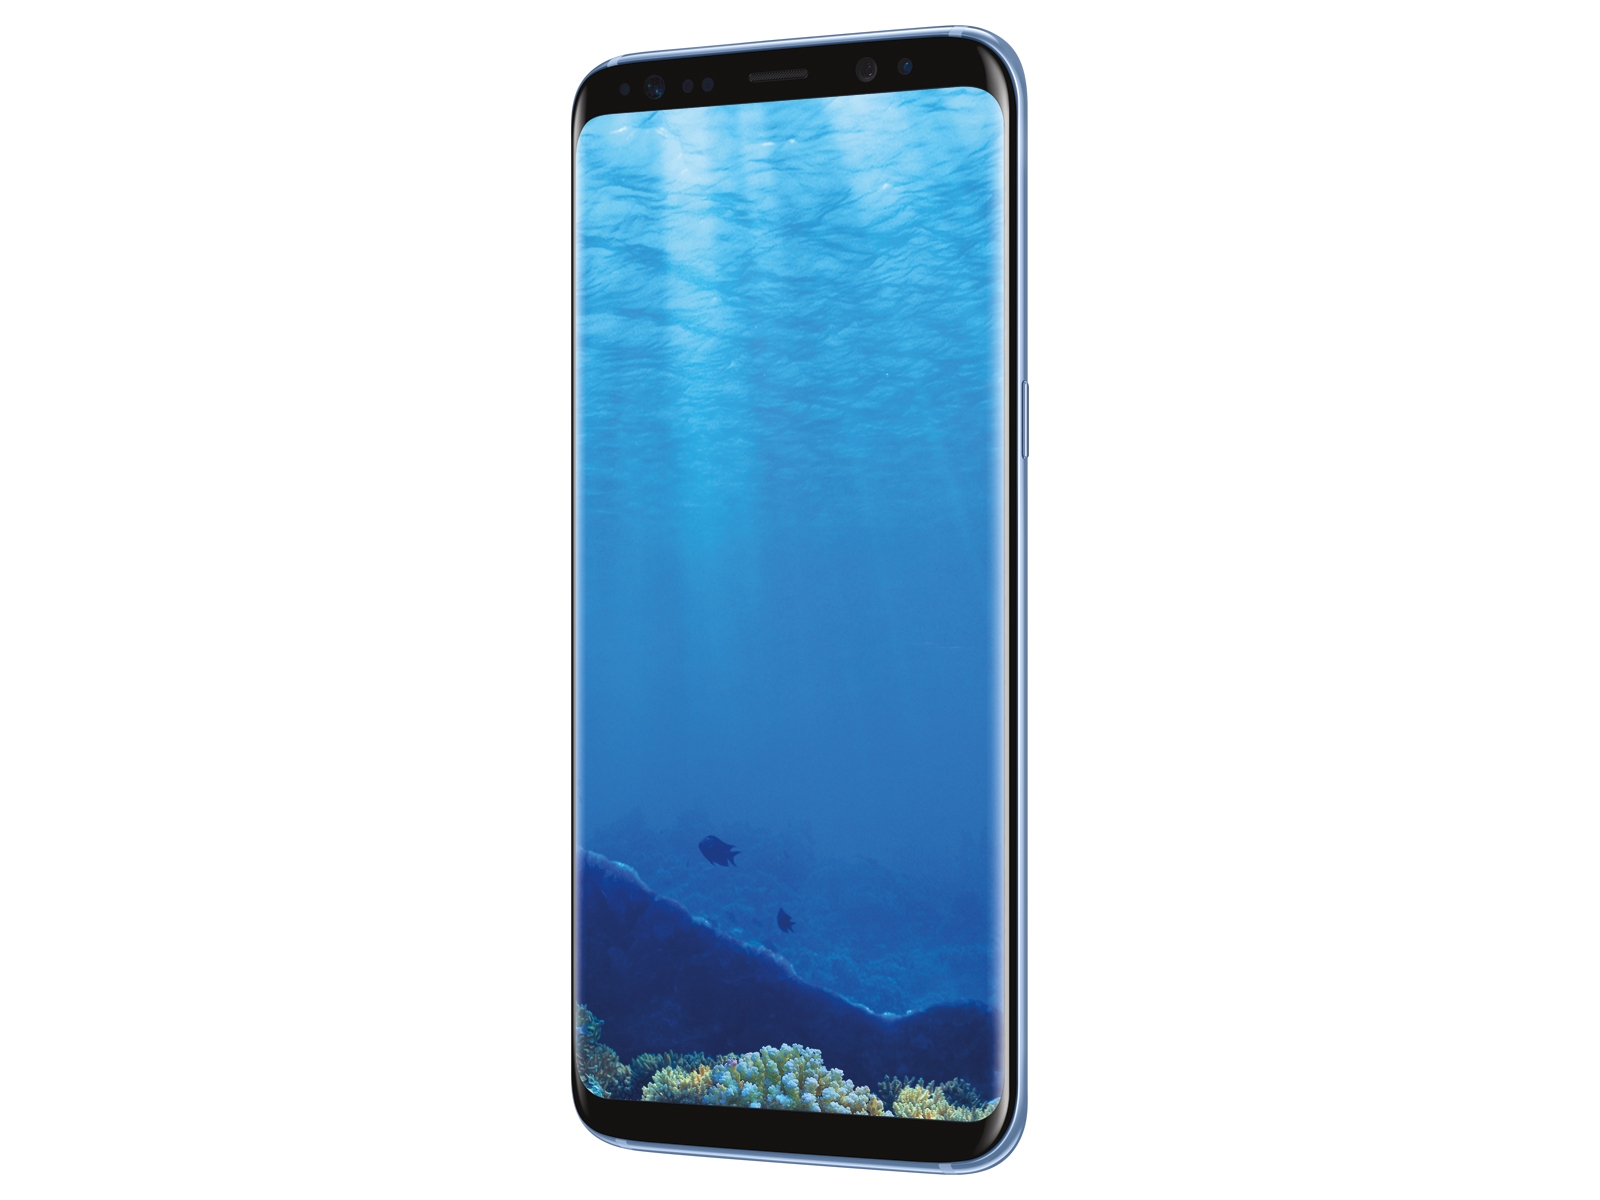 Thumbnail image of Galaxy S8 64GB (Unlocked)